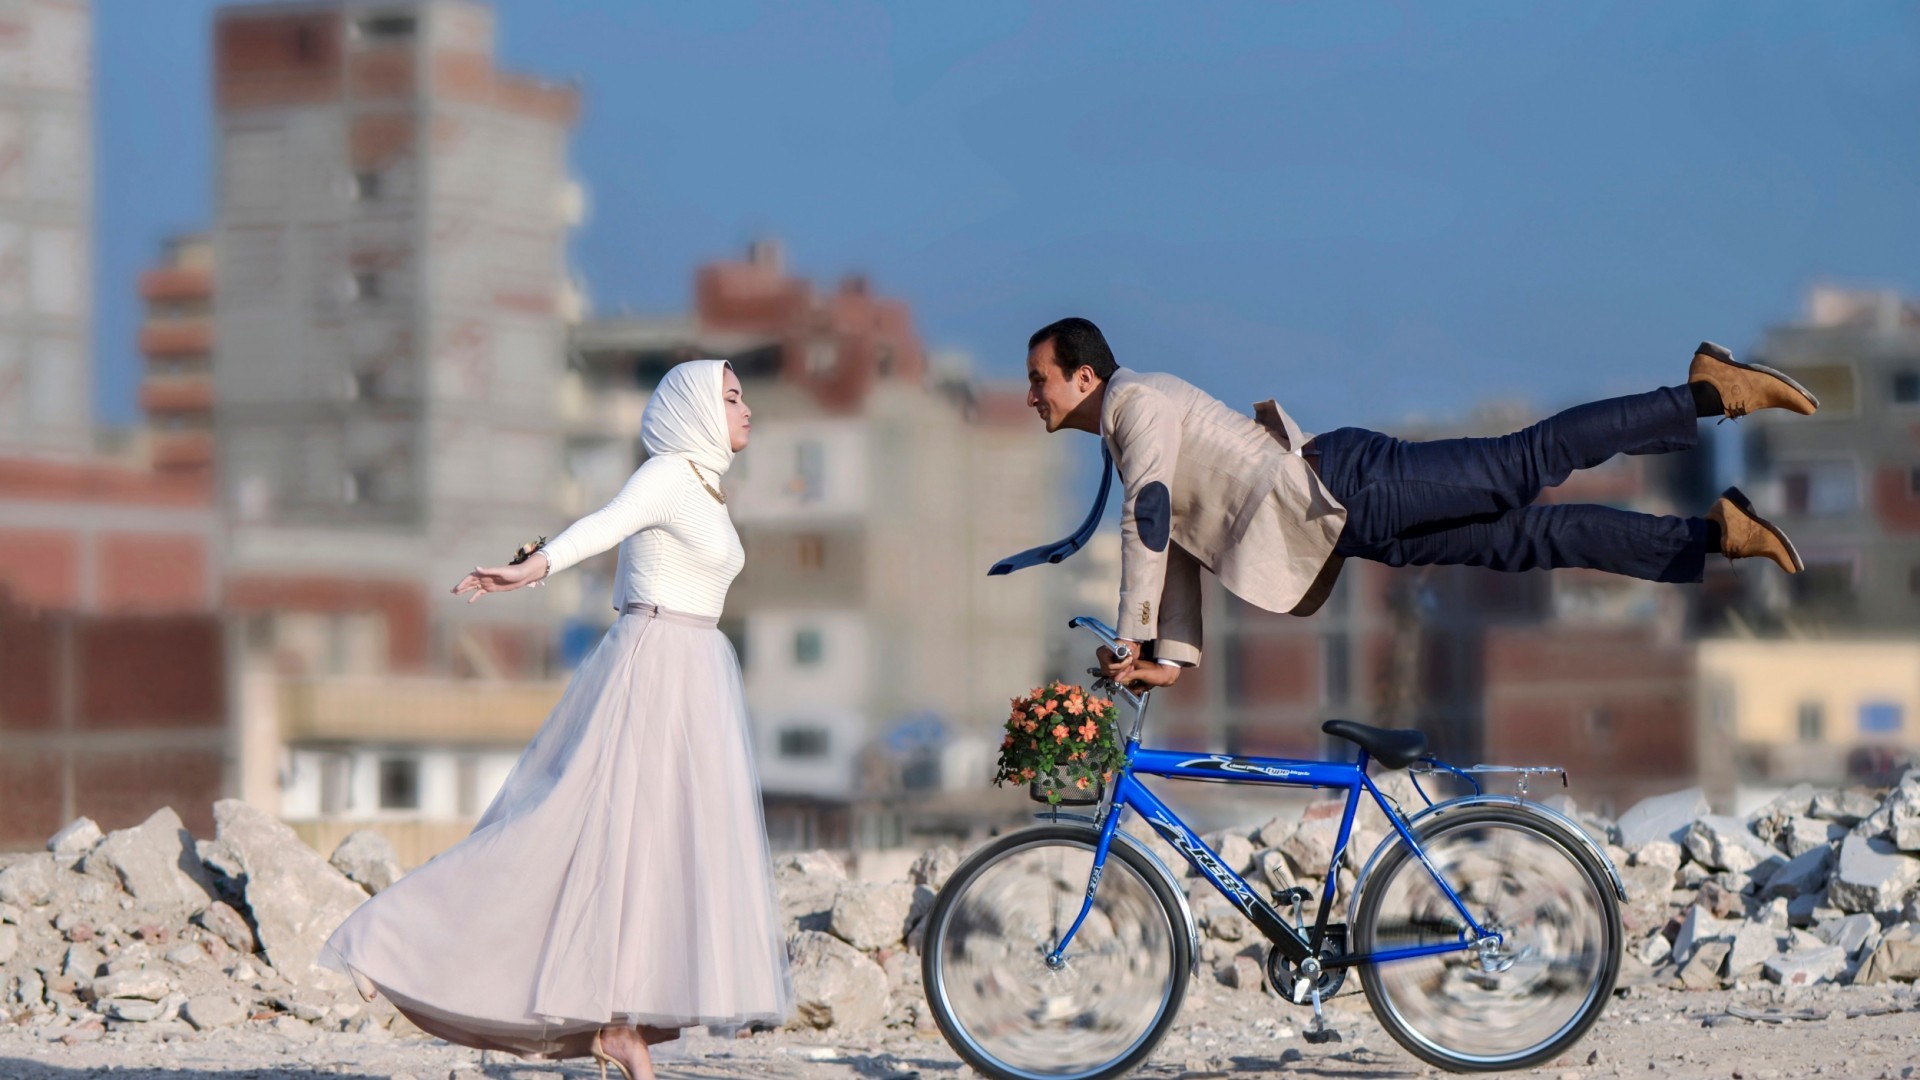 People 1920x1080 couple lovers Arabian men women outdoors depth of field bicycle love vehicle dress white dress tie standing closed eyes